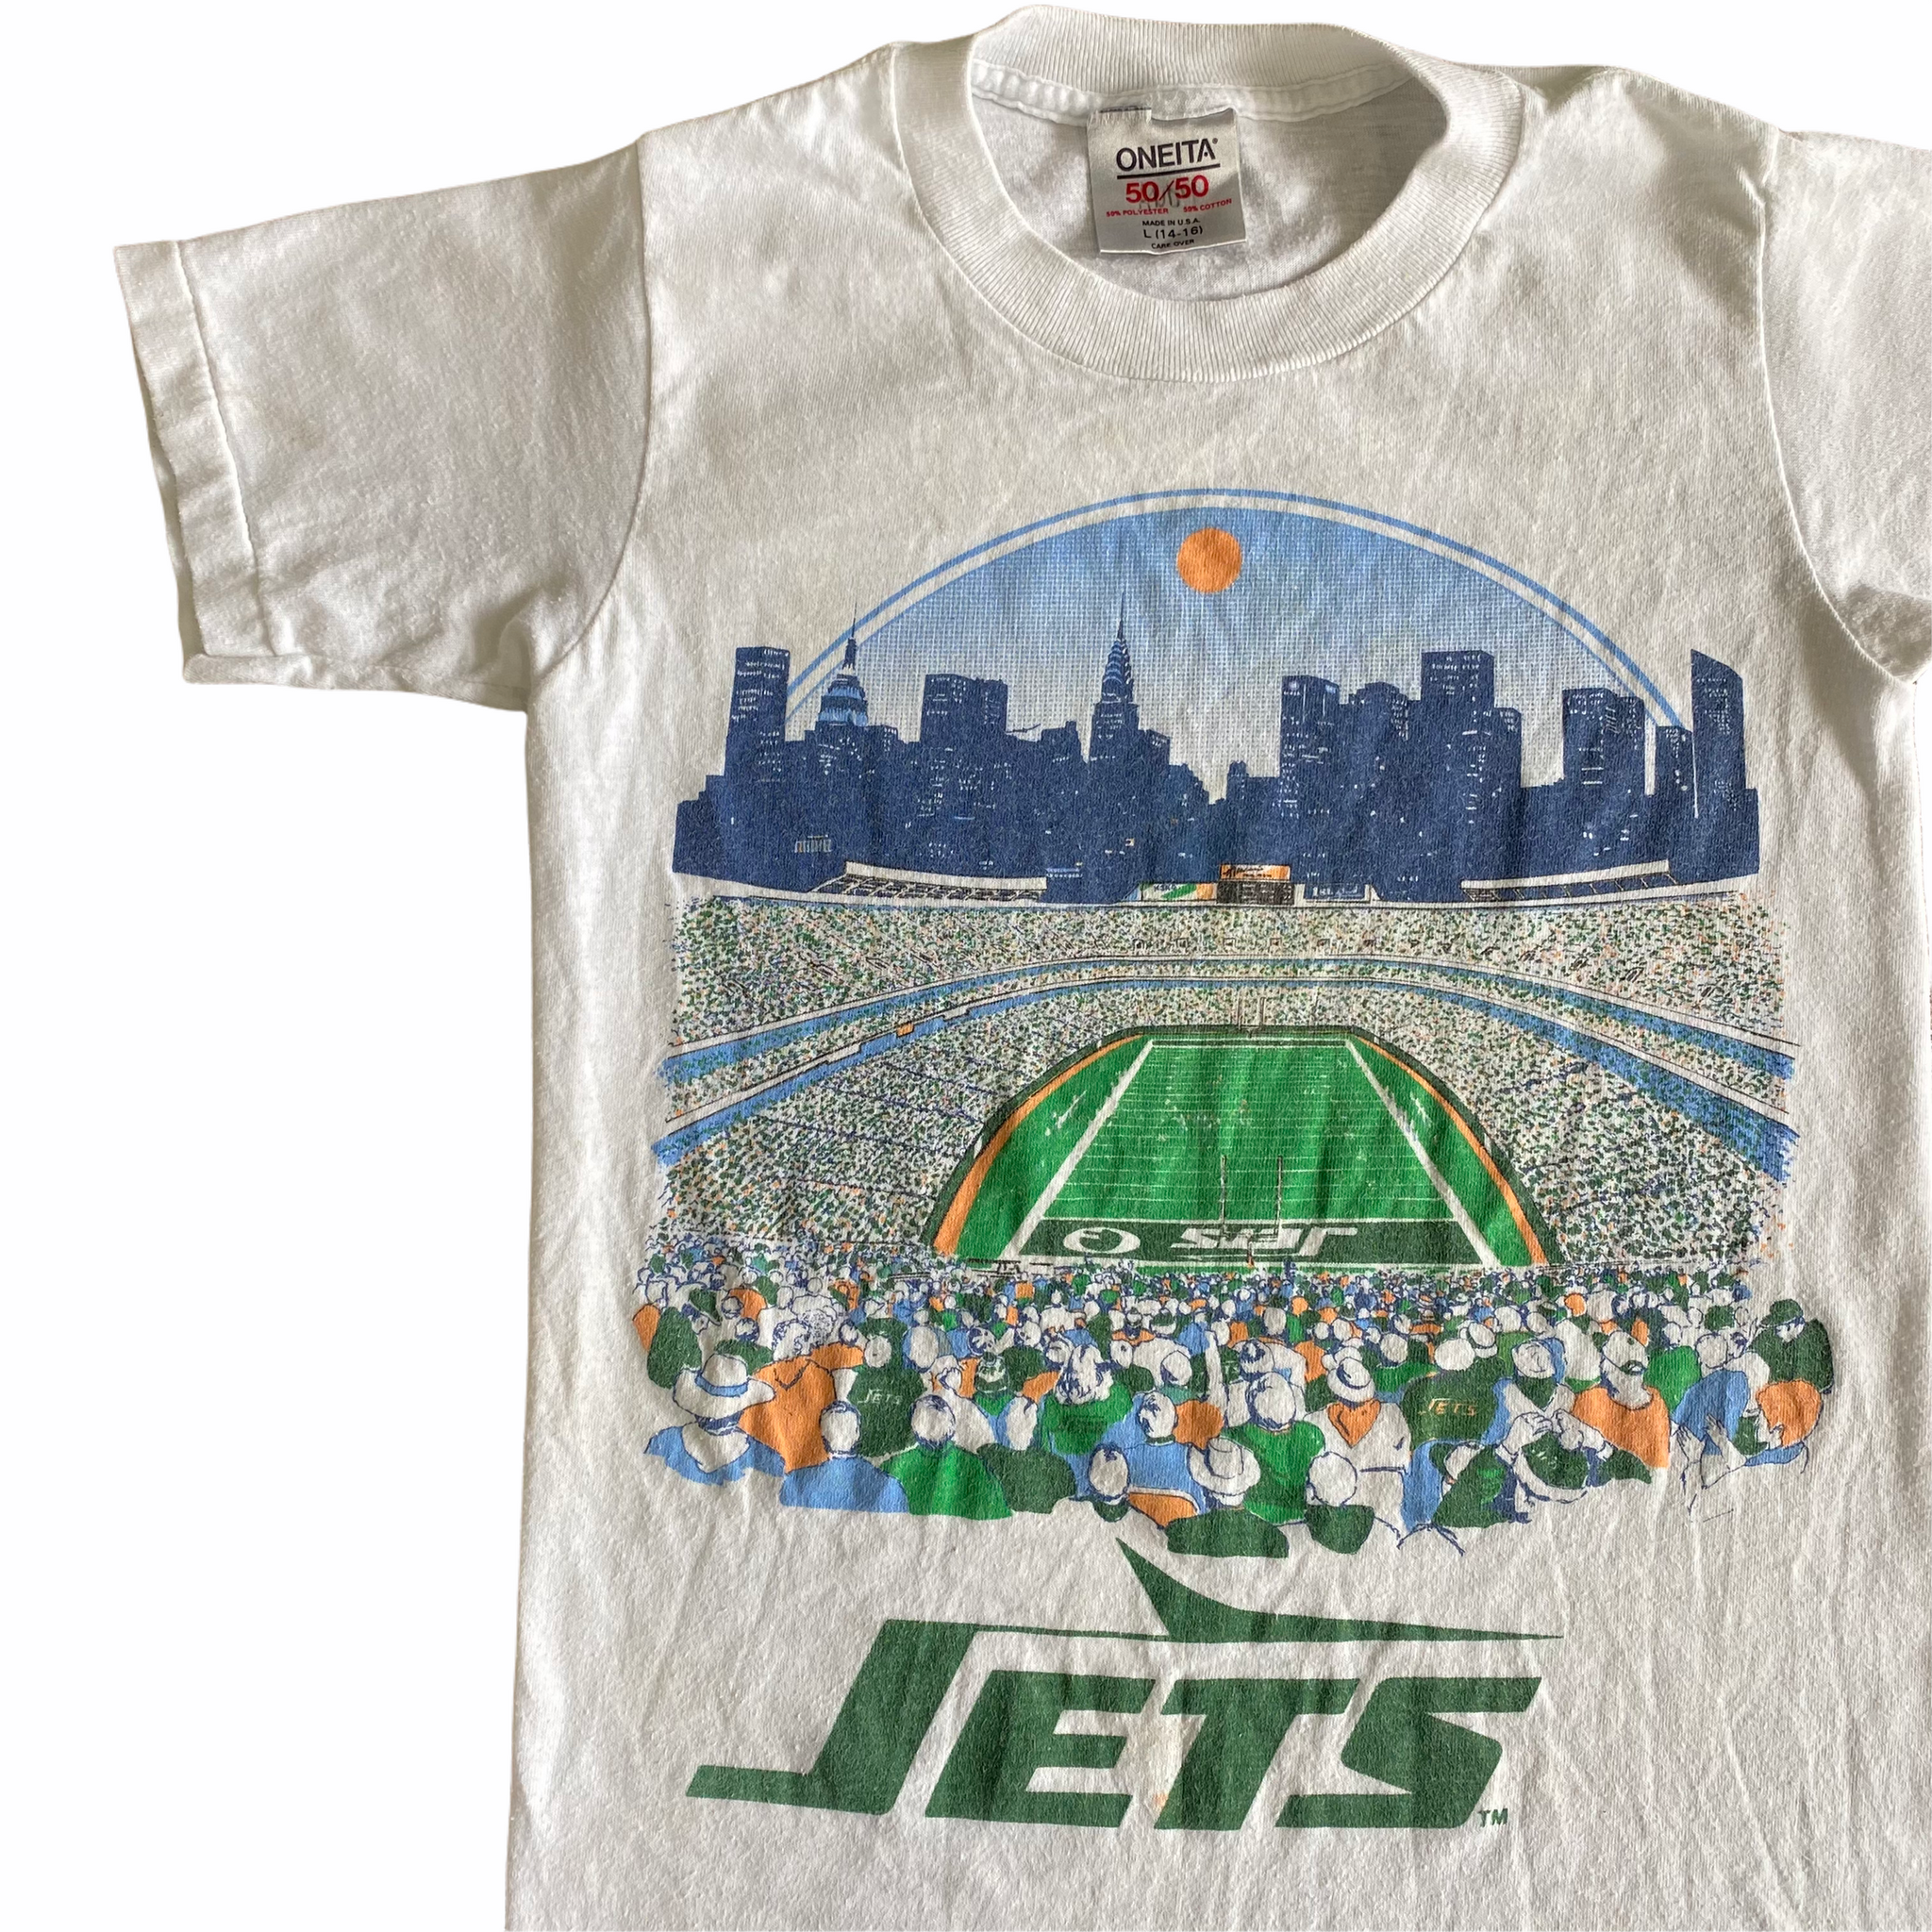 90s Jets tee. kids large.